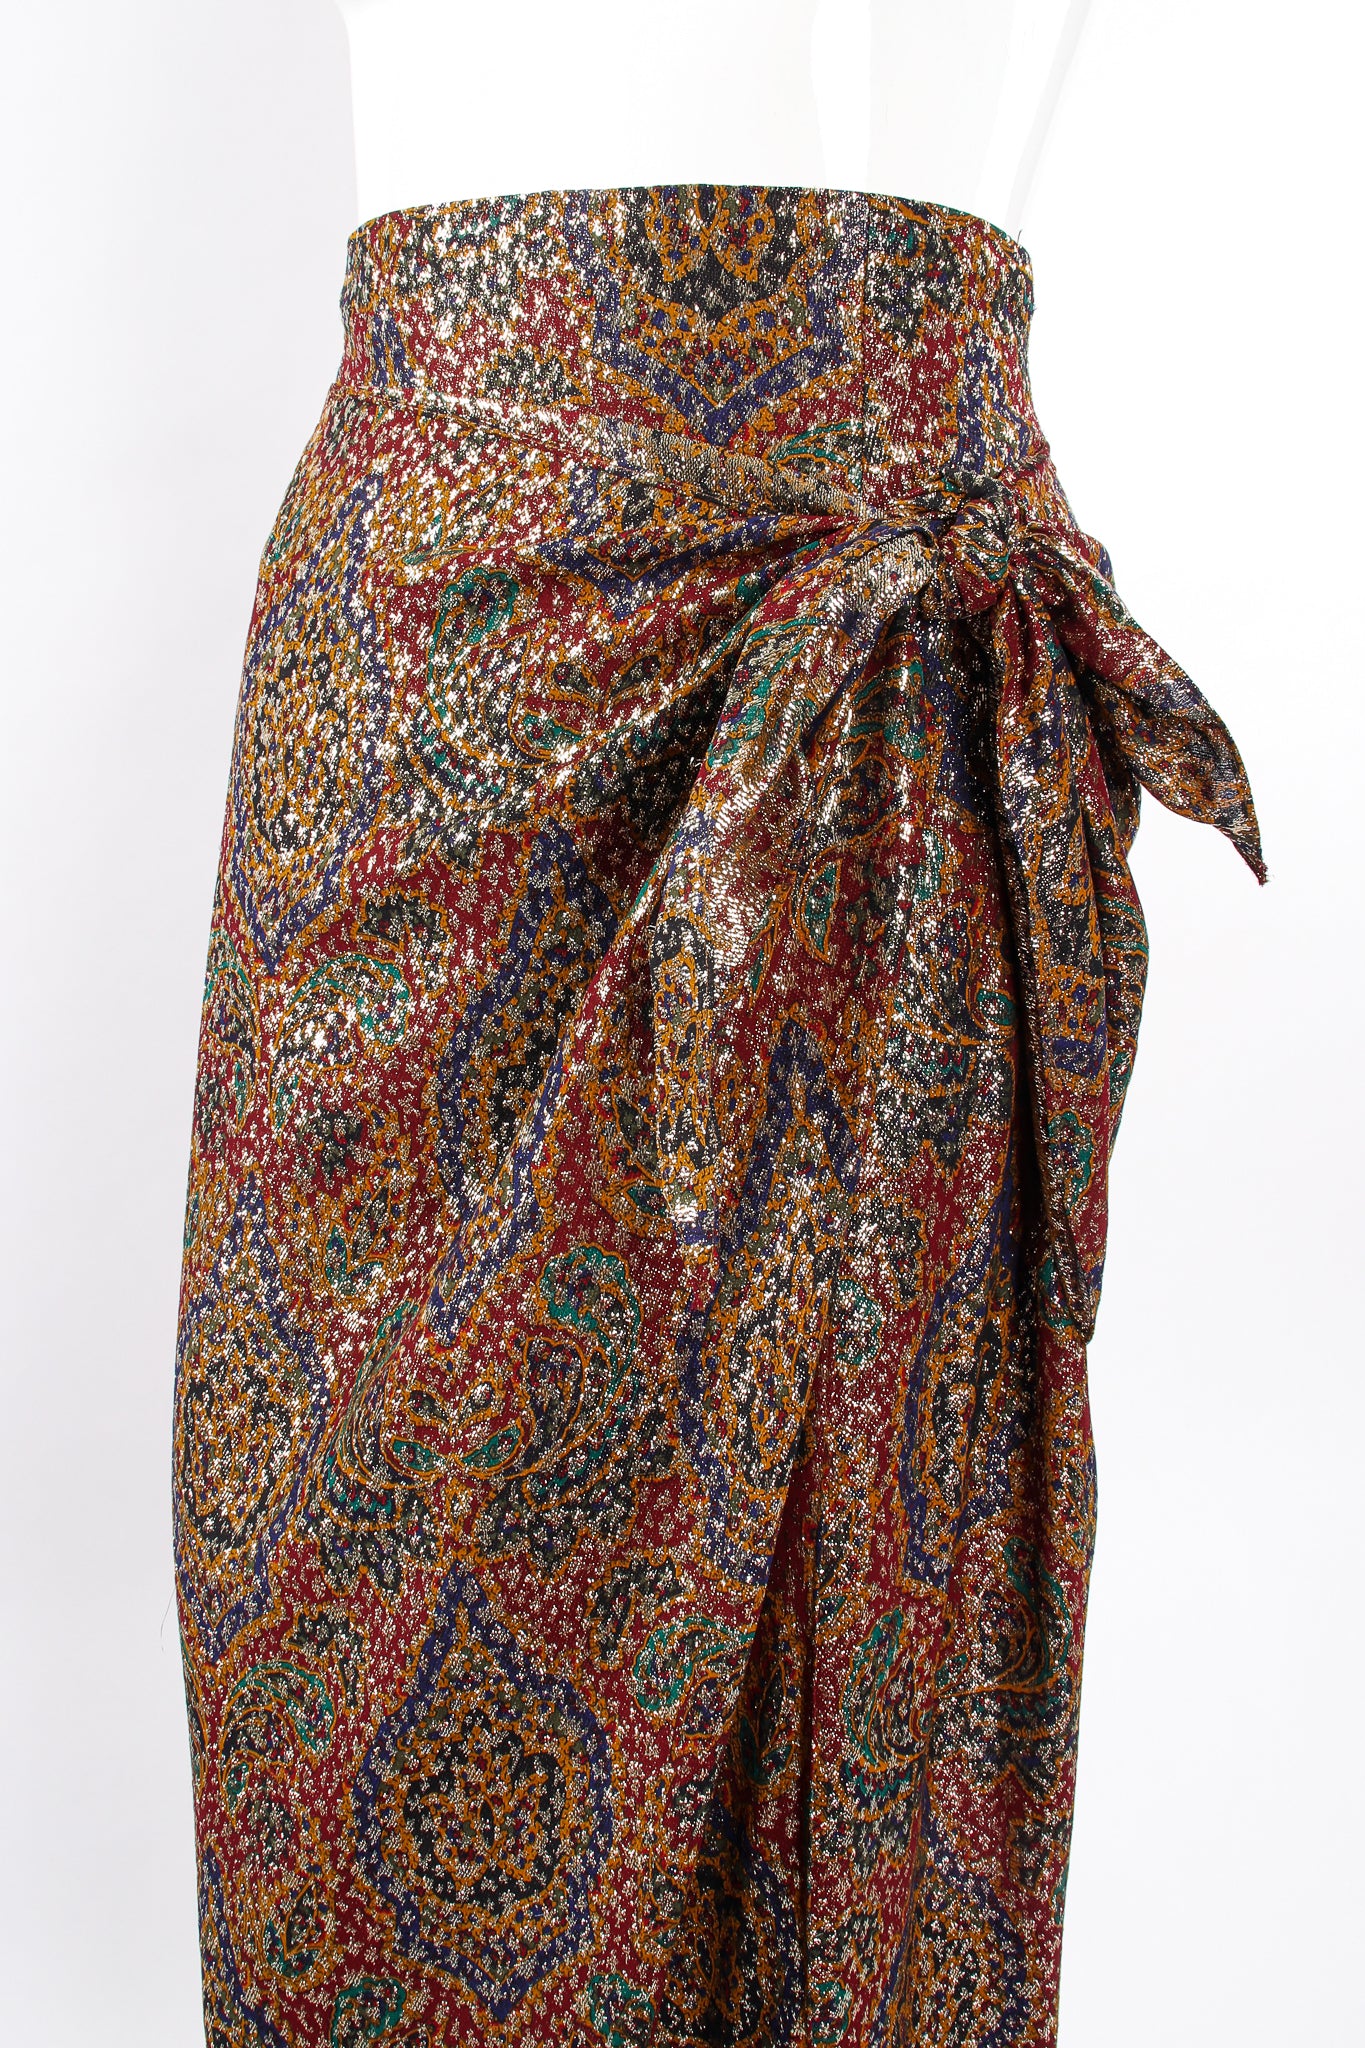 Vintage Anne Klein Faux Wrap Metallic Lamé Sarong Skirt on Mannequin crop at Recess Los Angeles